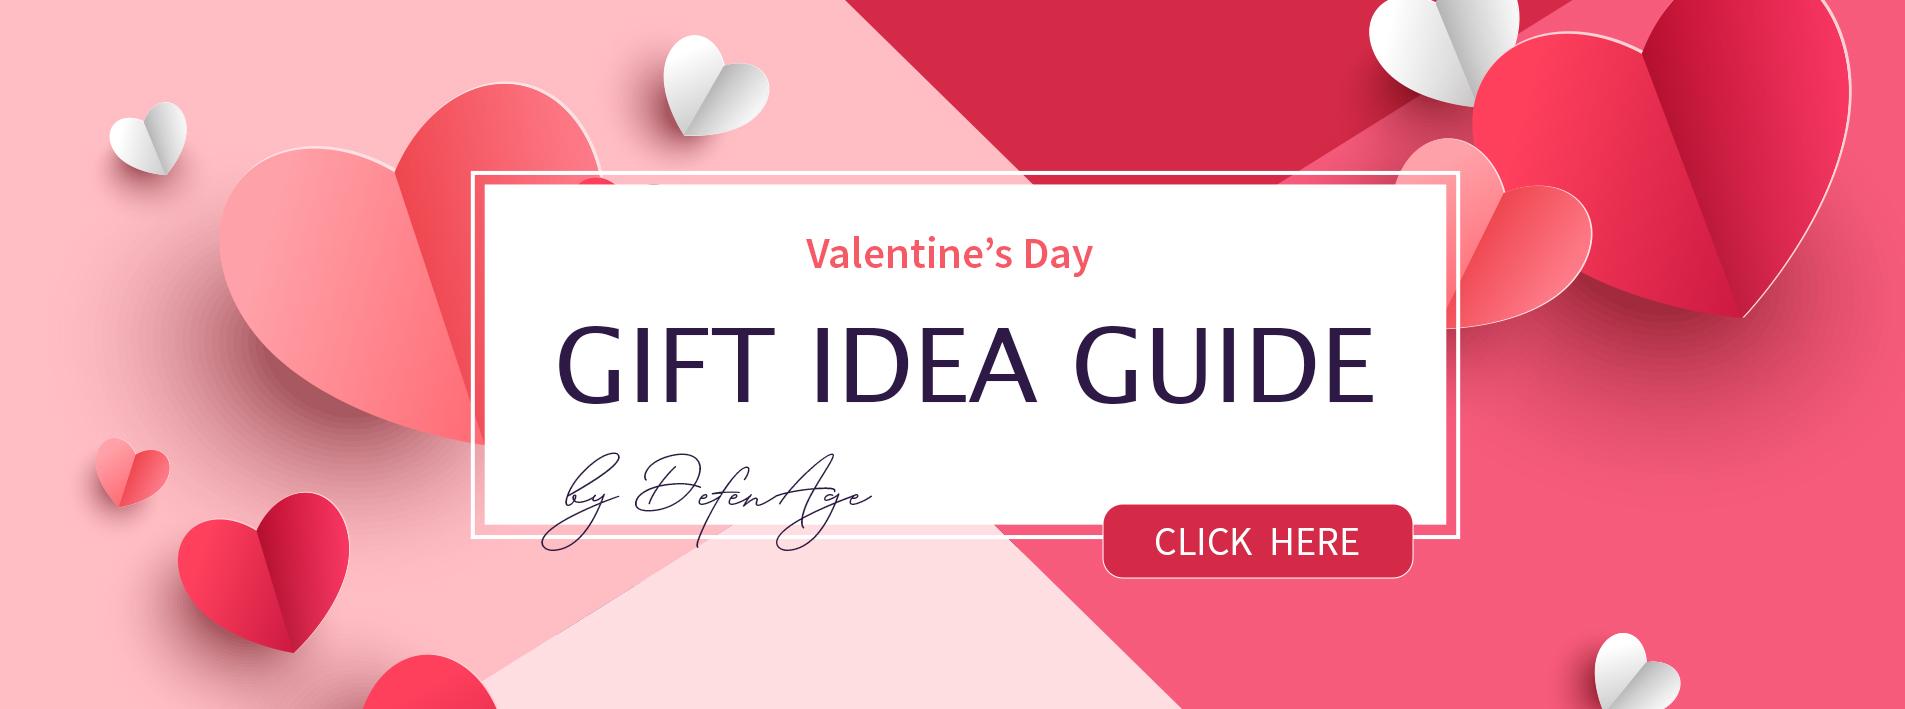 Gift Idea Guide for Valentine's Day